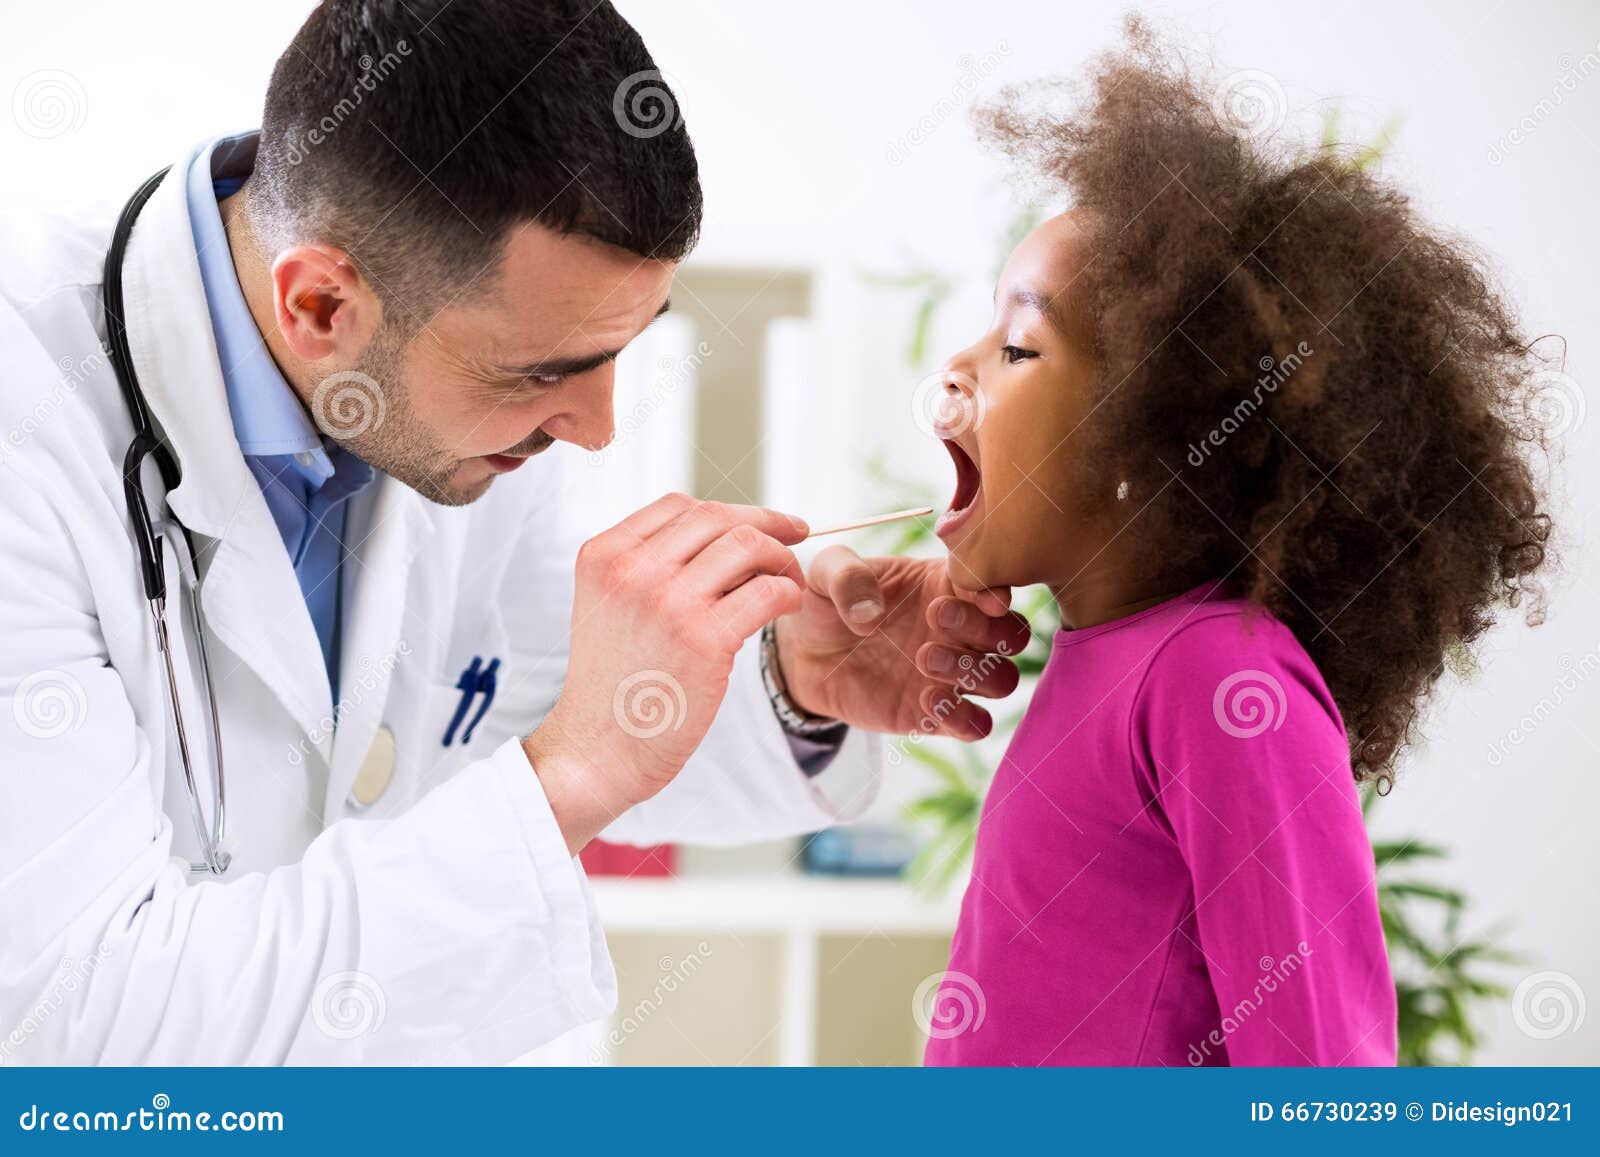 pediatrician examining cute smiling african girl, throat sick